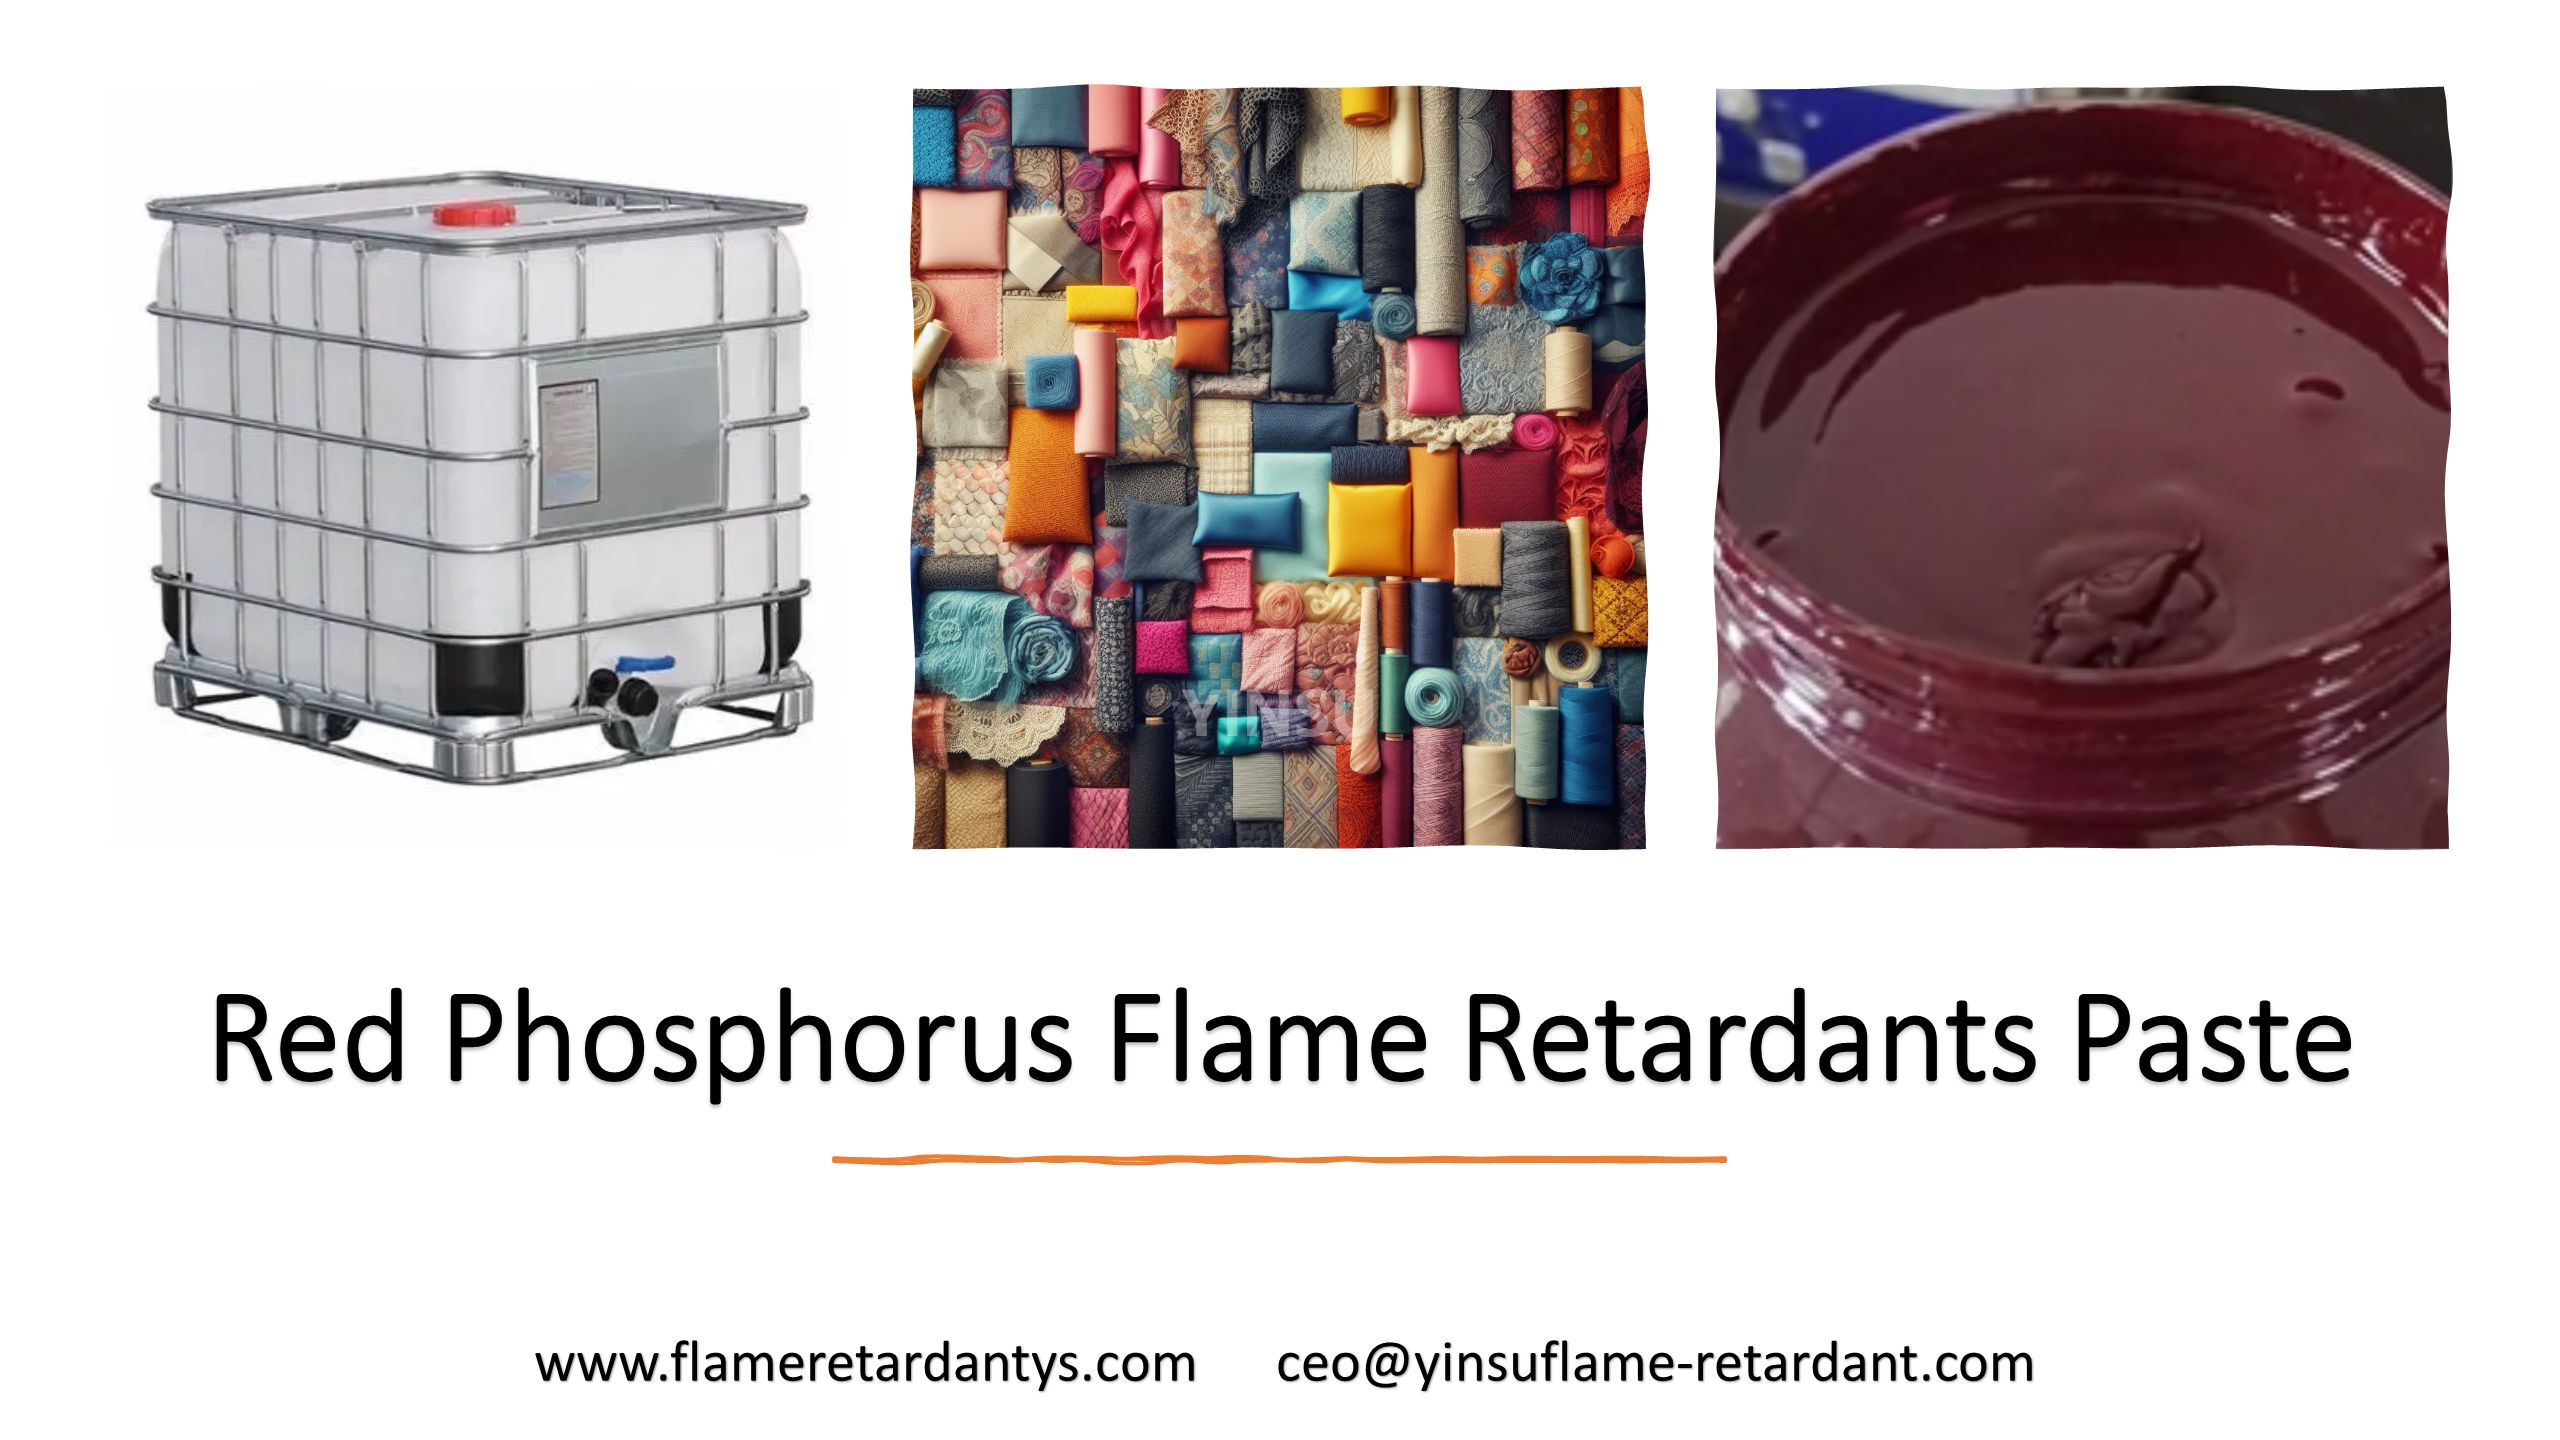 18. Red Phosphorus Flame Retardants Paste